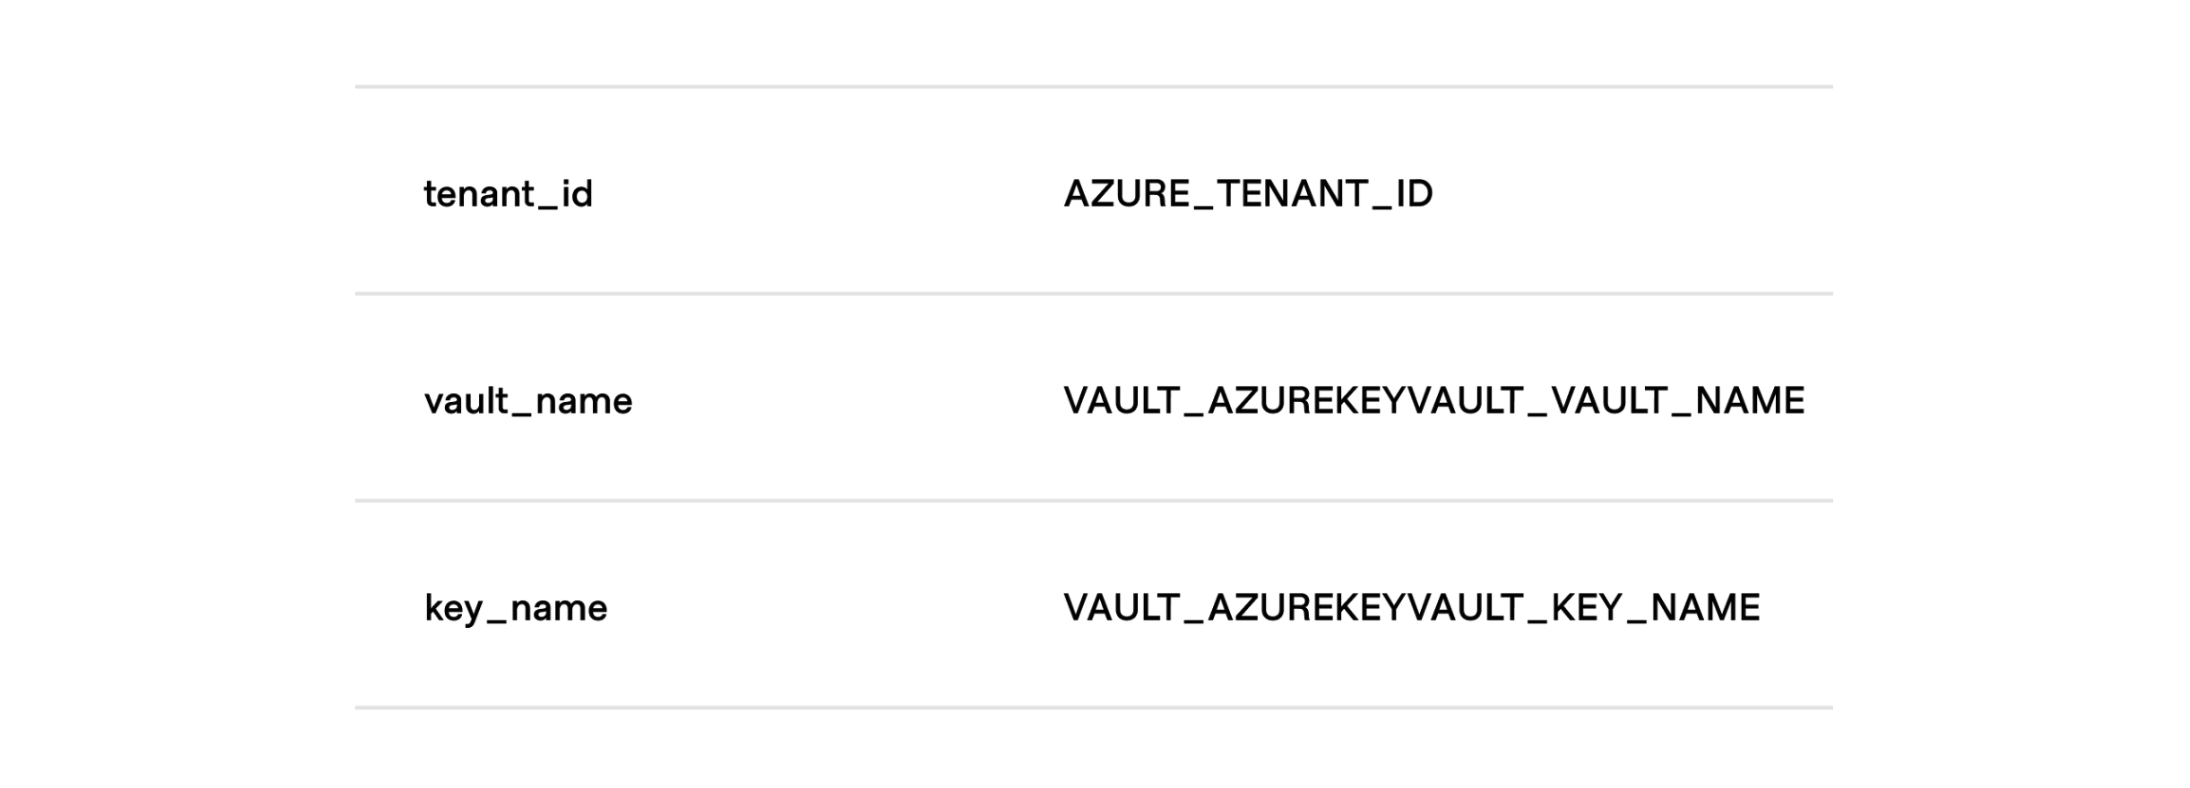 tenant_id = AZURE_TENANT_ID, vault_name = VAULT_AZUREKEYVAULT_VAULT_NAME , key_name = VAULT_AZURE_KEYVAULT_KEY_NAME